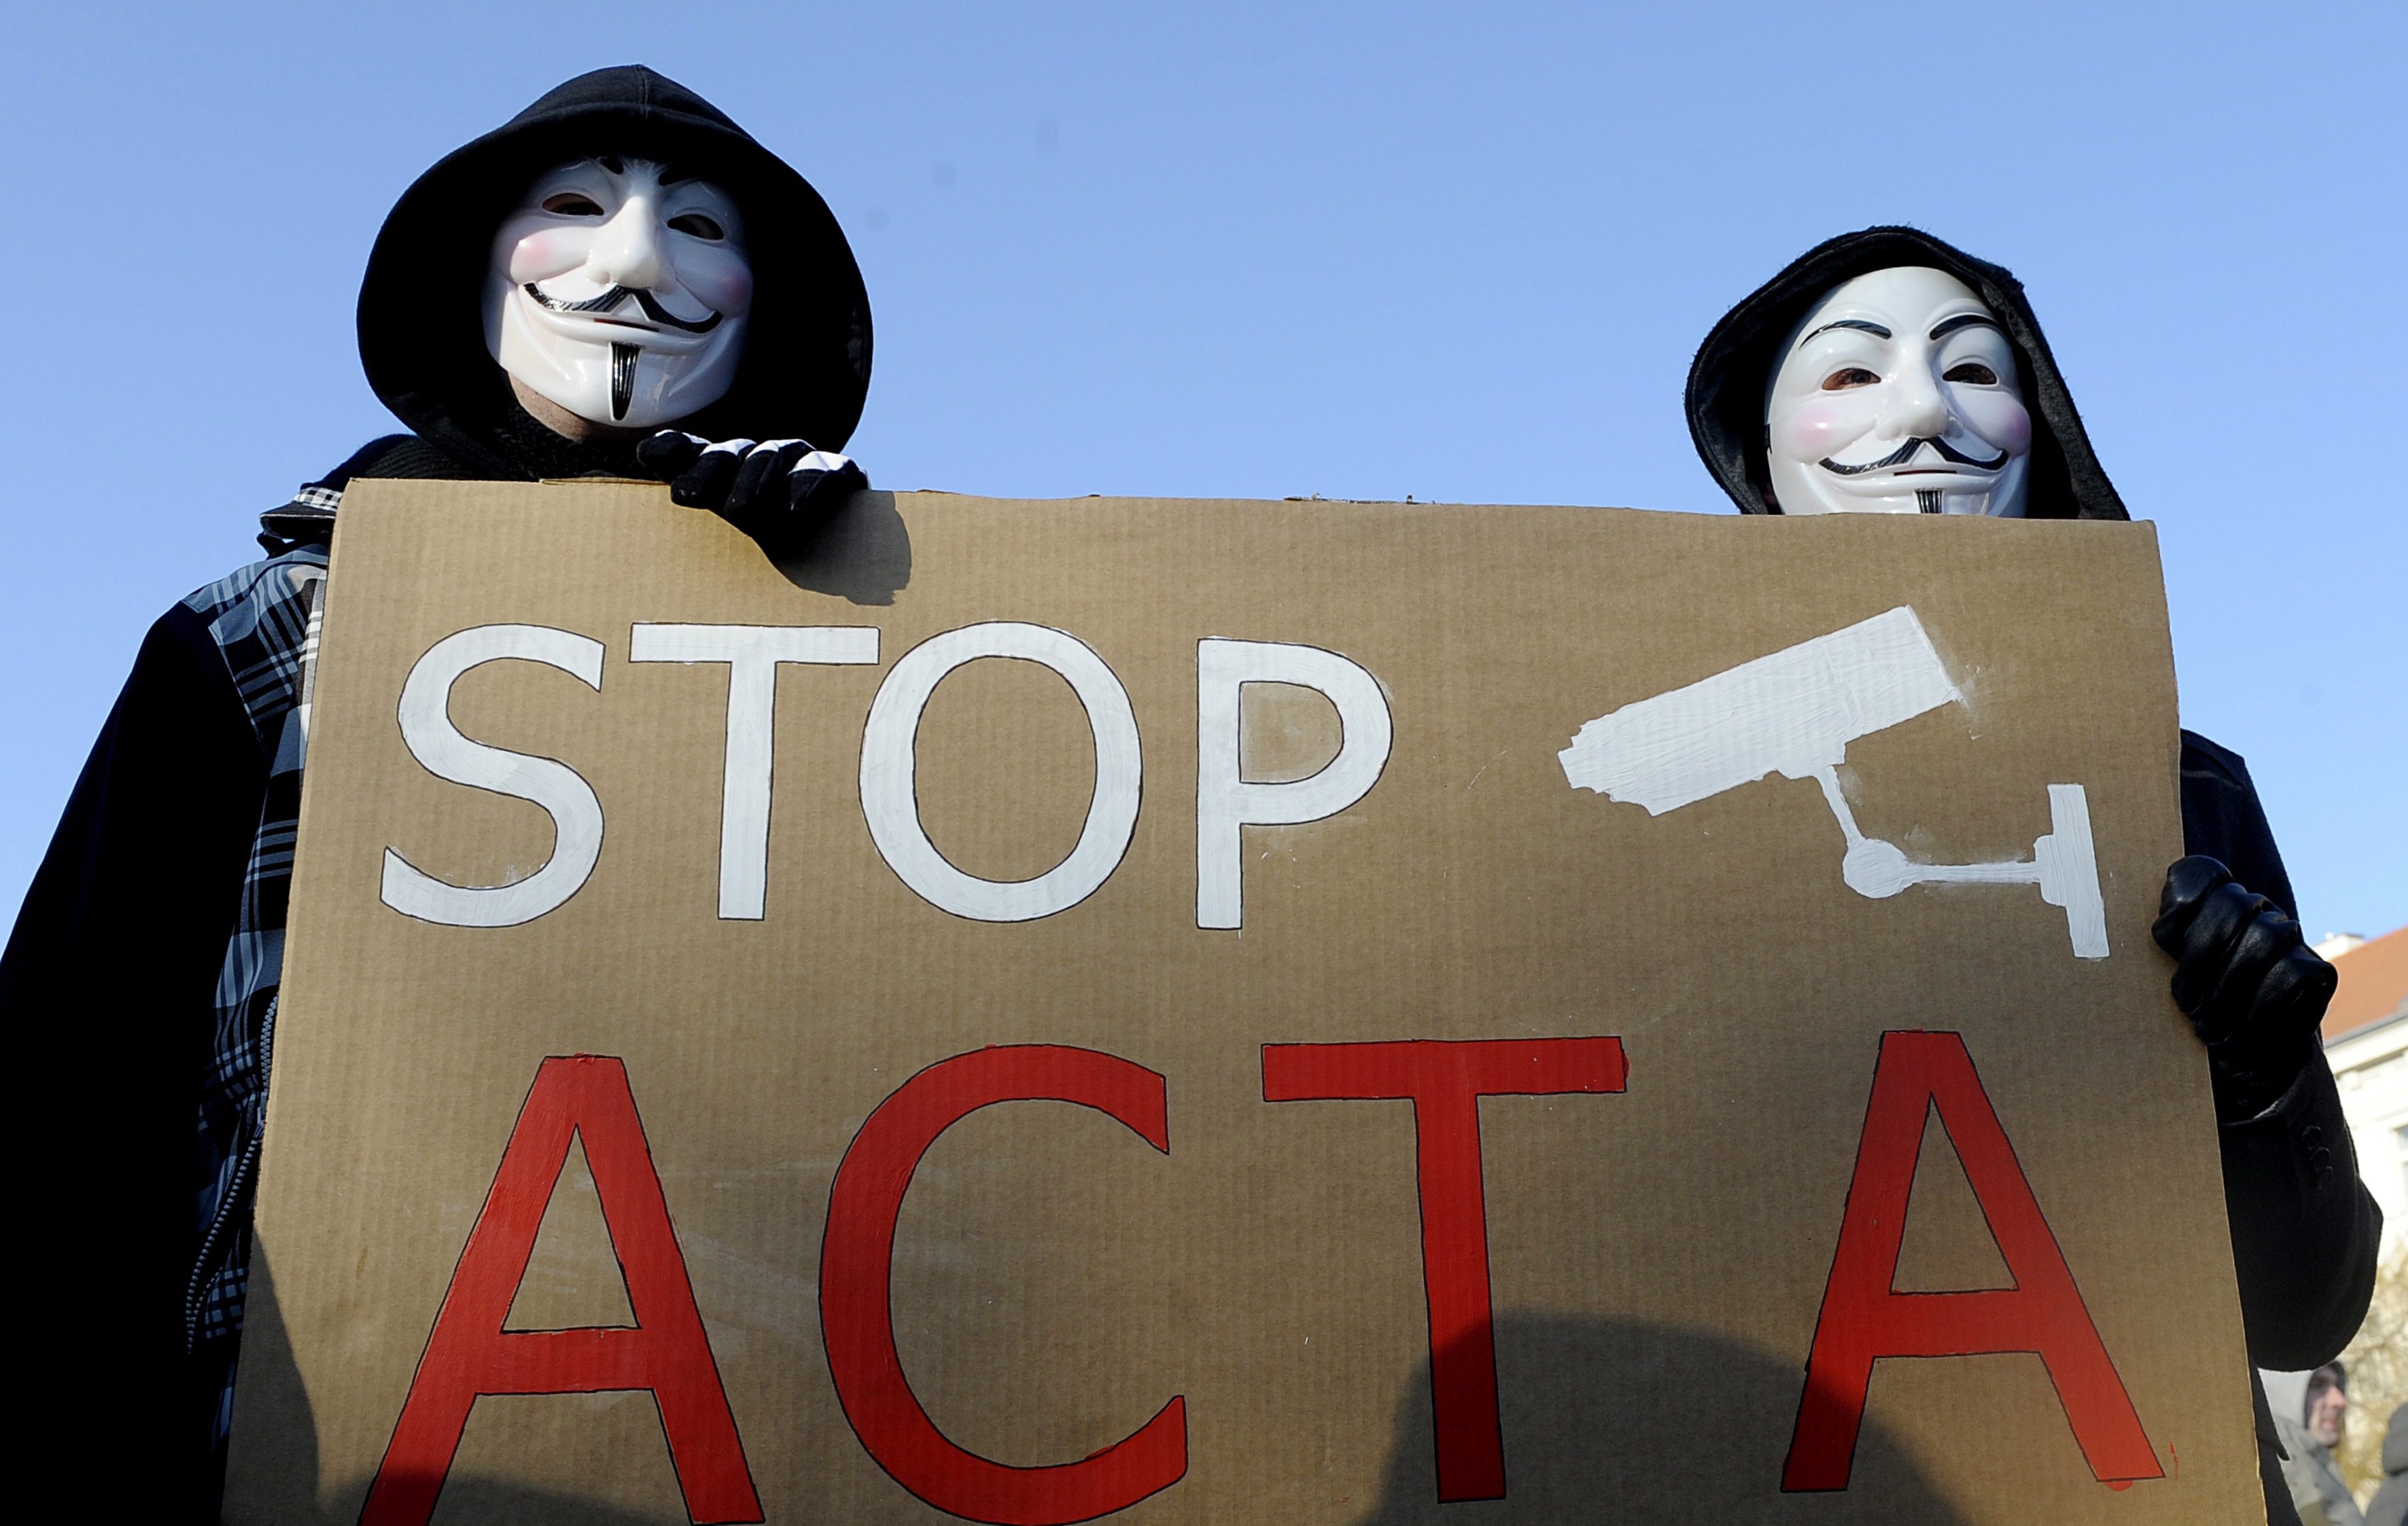 ACTA – Και οι Ελληνες διαδηλώνουν κατά της αντιπειρατικής Συνθήκης